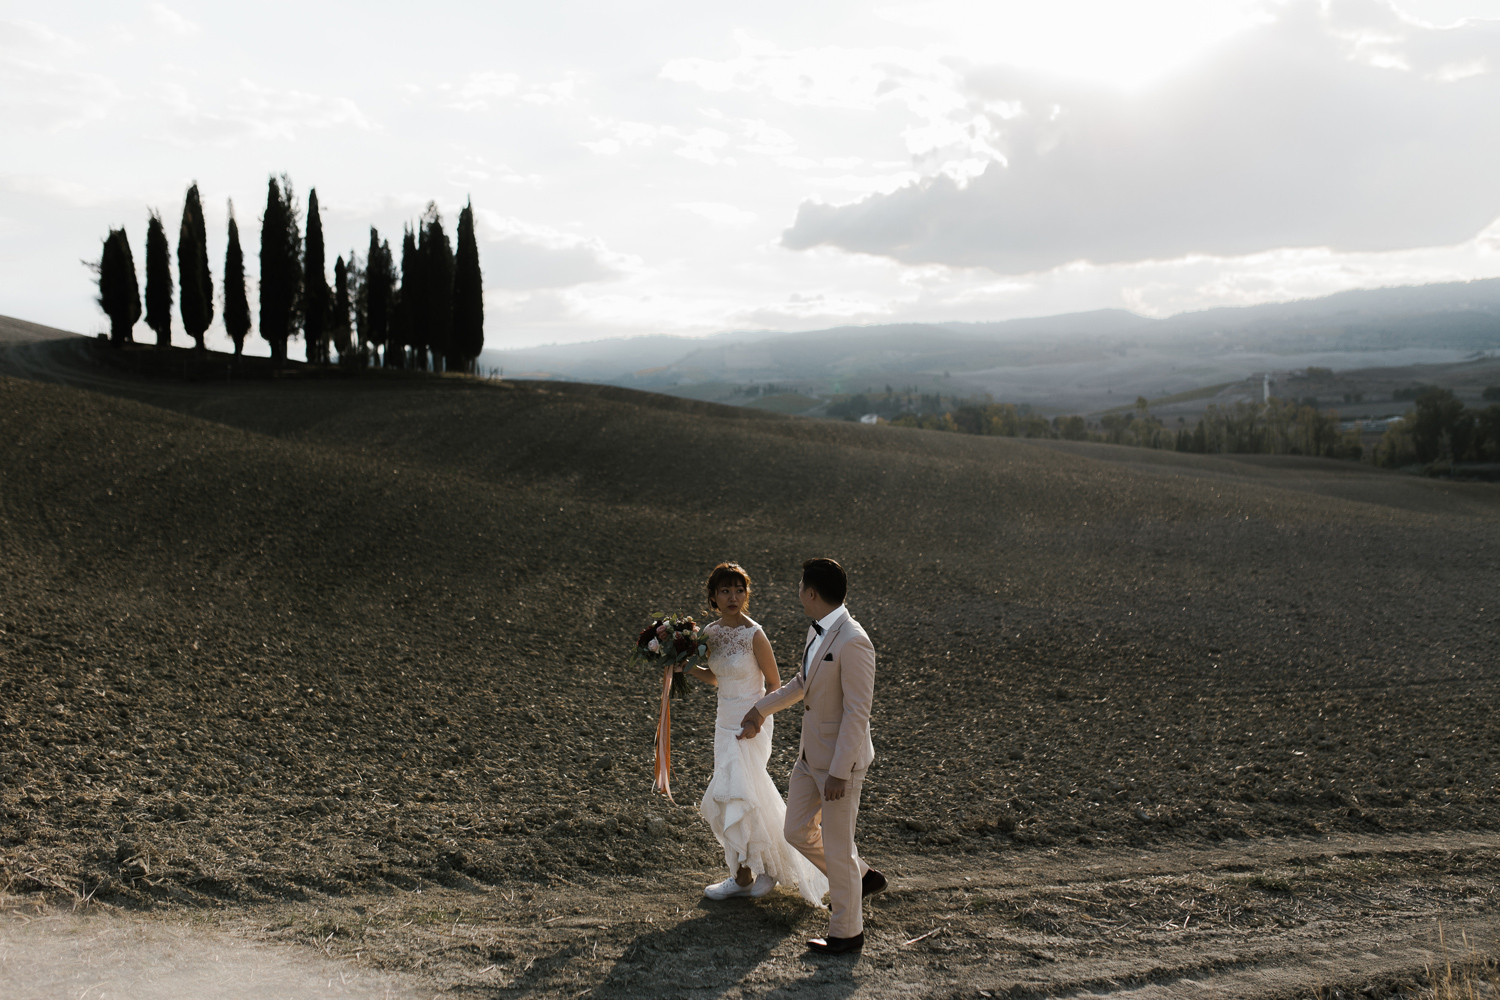 087-wedding-photographer-italy-tuscany-mindy-eddy.jpg